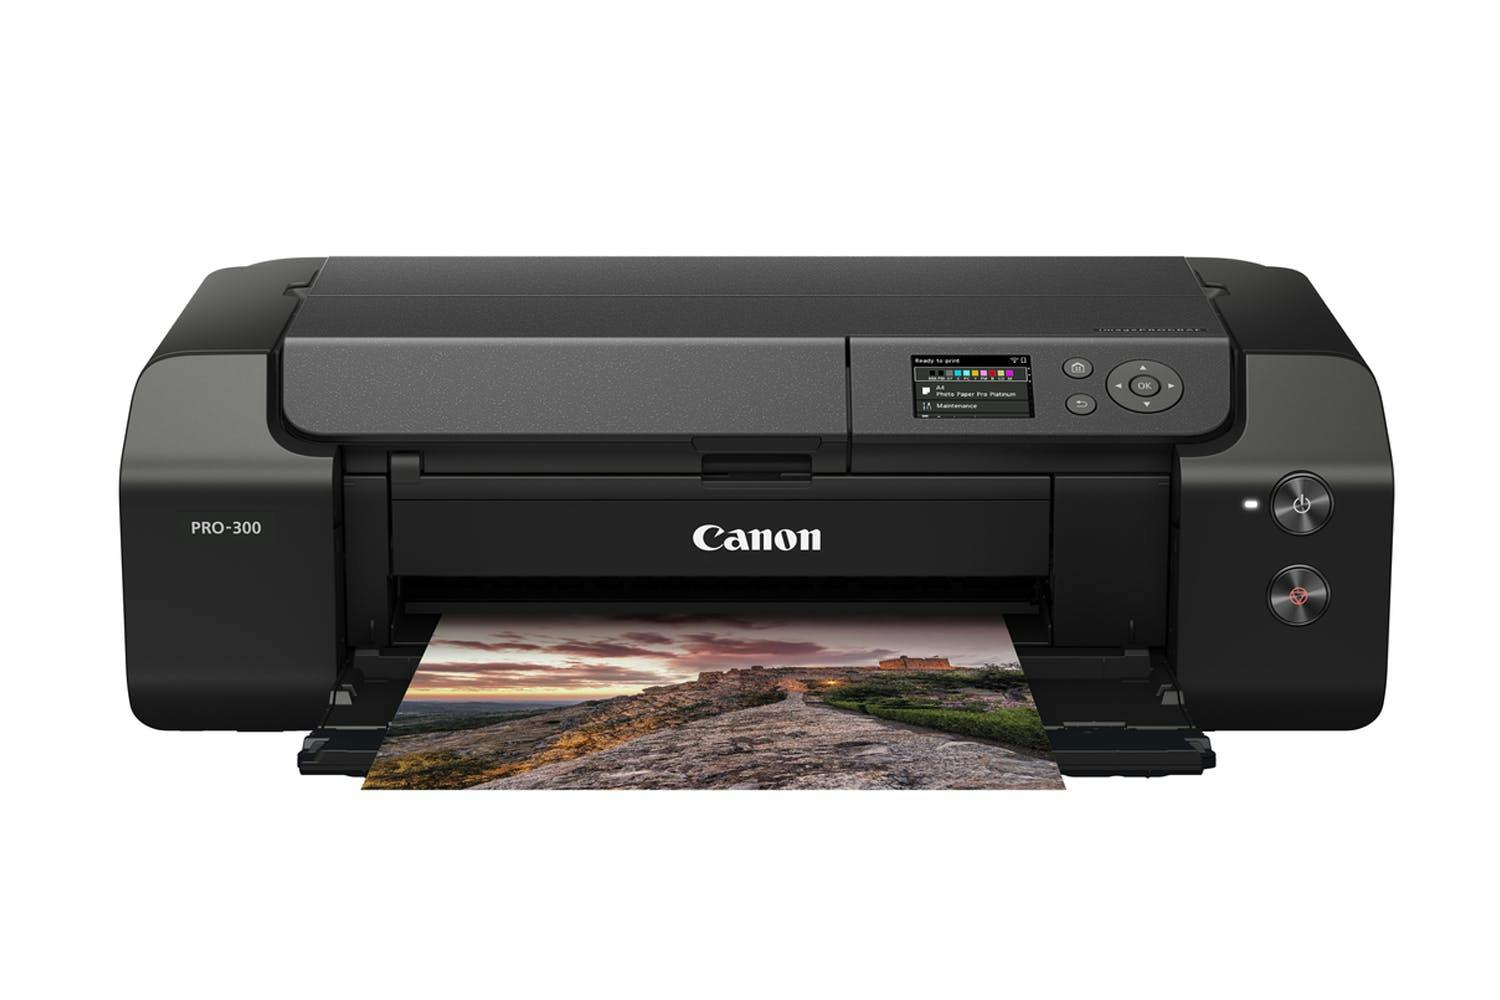 Canon imagePROGRAF Pro-300 A3+ Inkjet Photo Printer